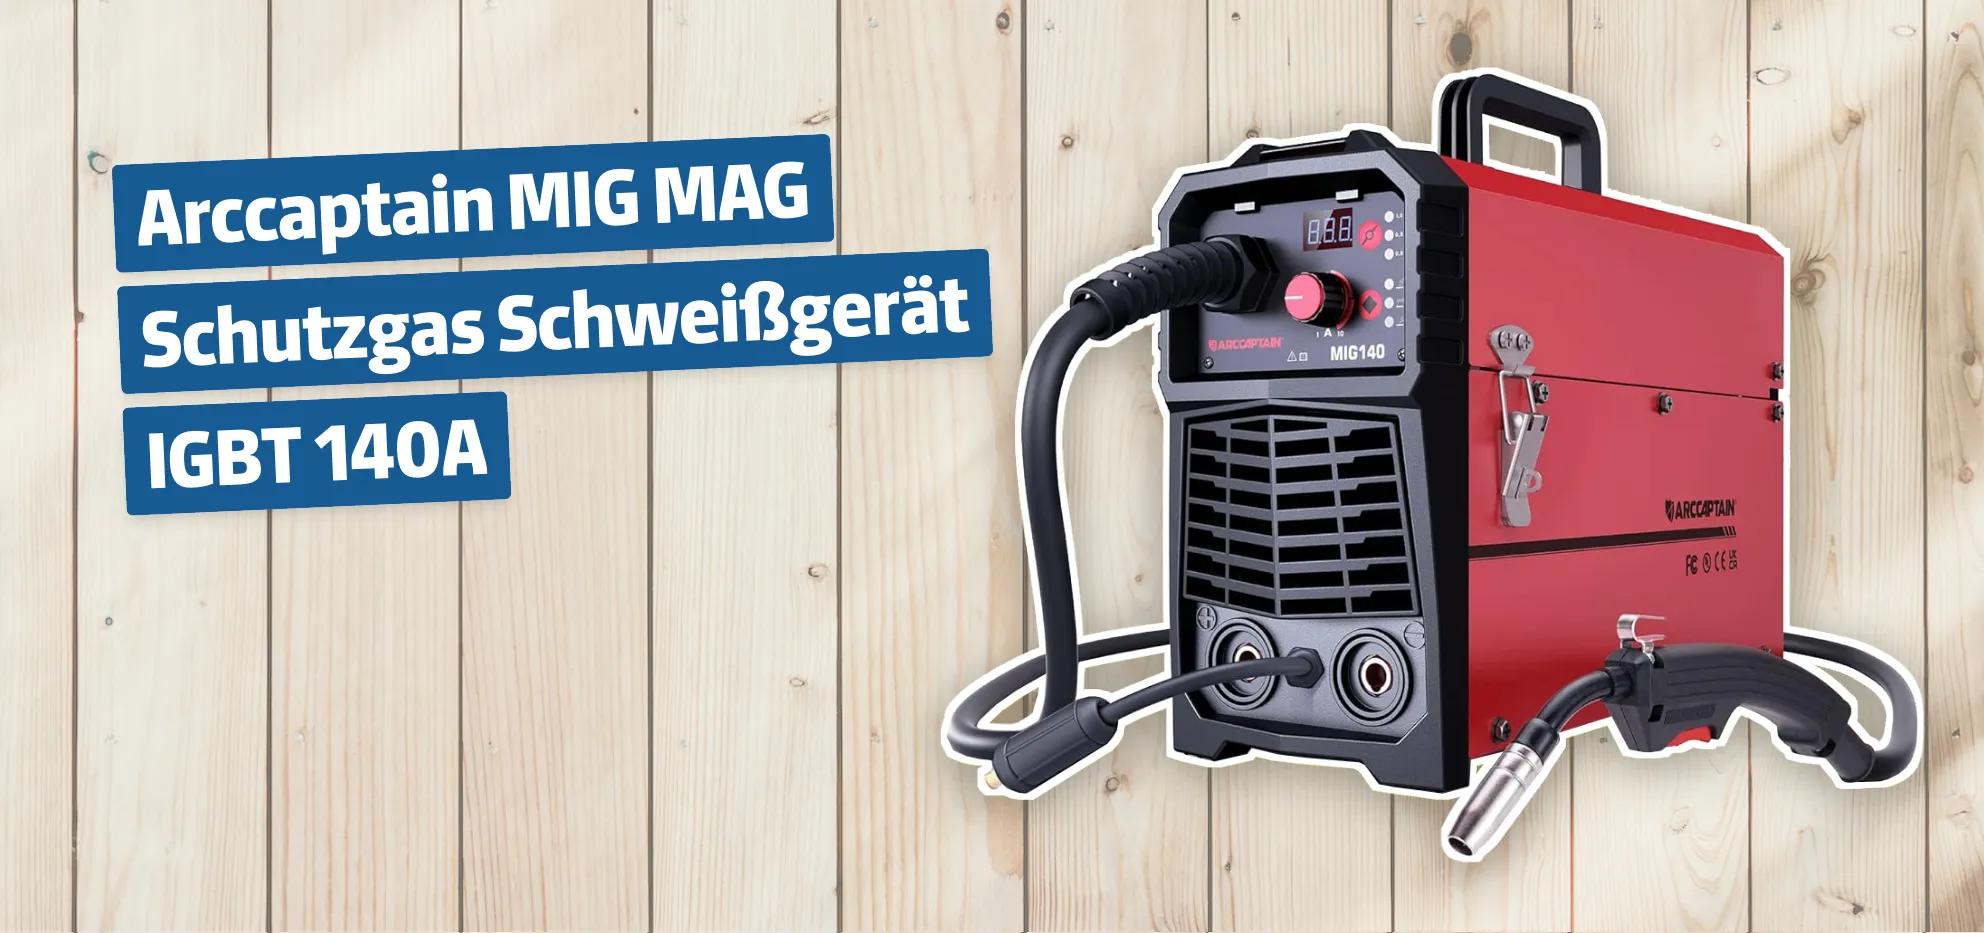 Arccaptain MIG MAG Schutzgas Schweißgerät IGBT 140A